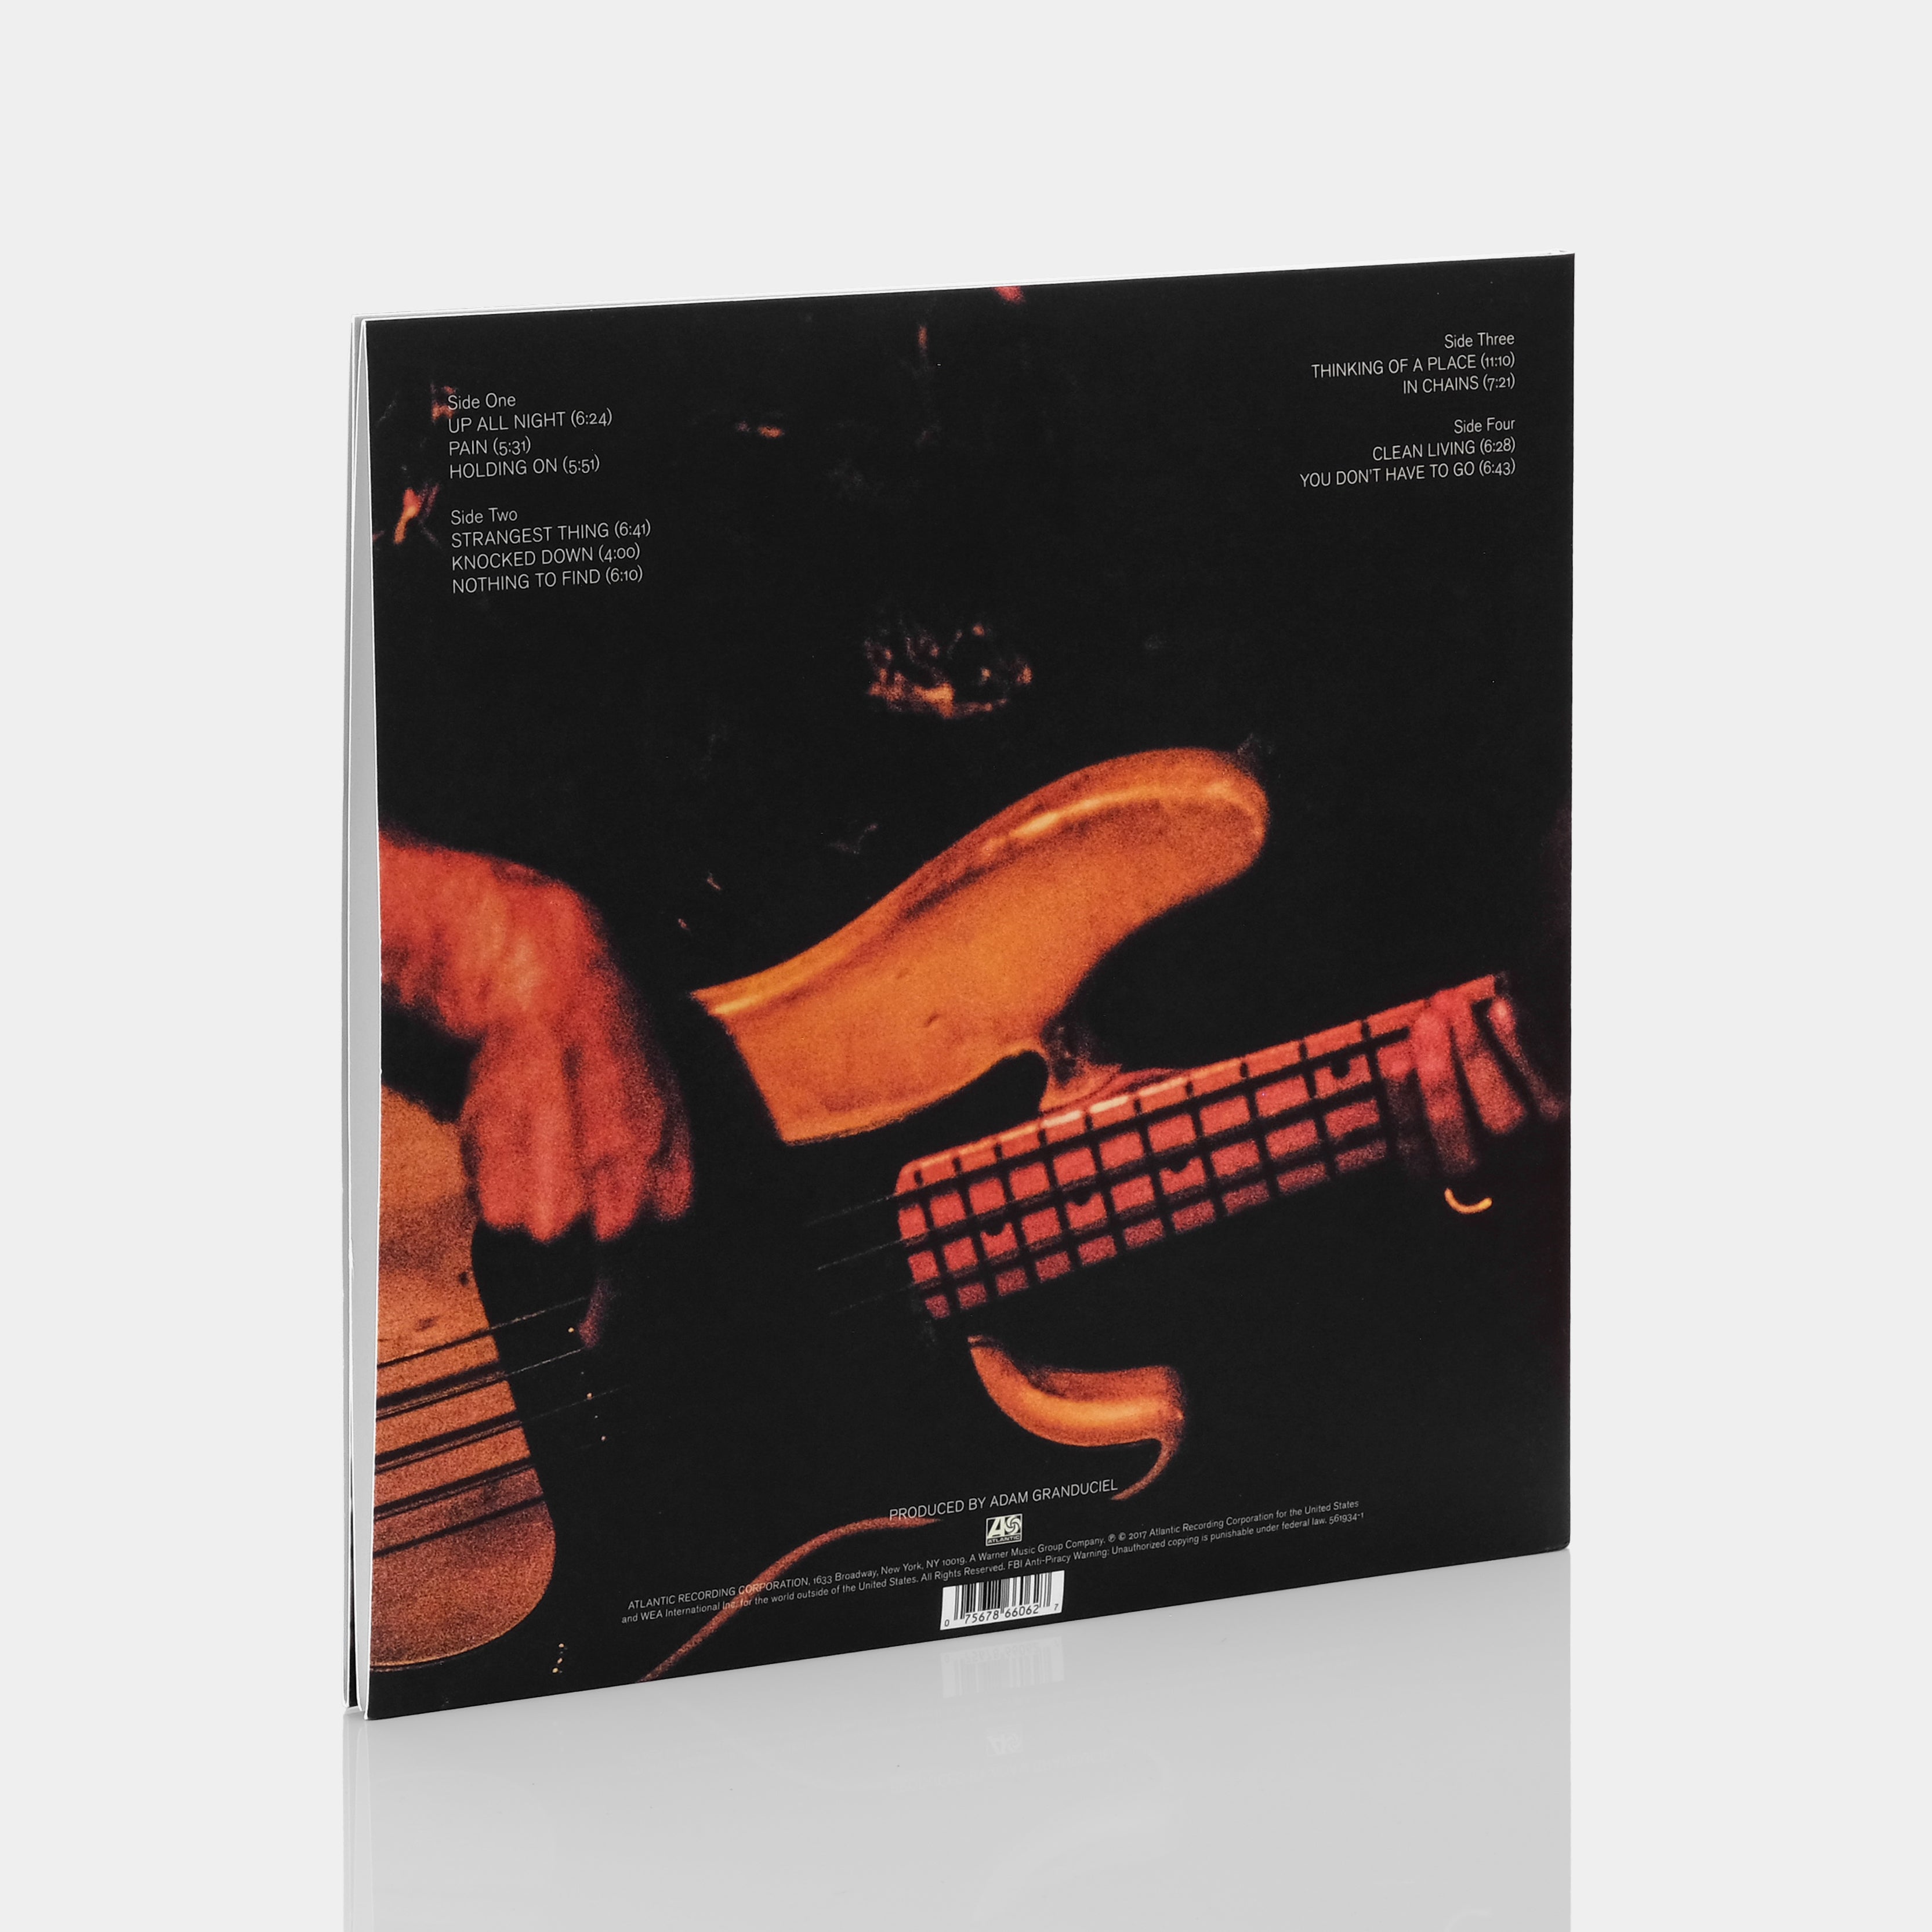 The War on Drugs - A Deeper Understanding 2xLP Translucent Tangerine Vinyl Record